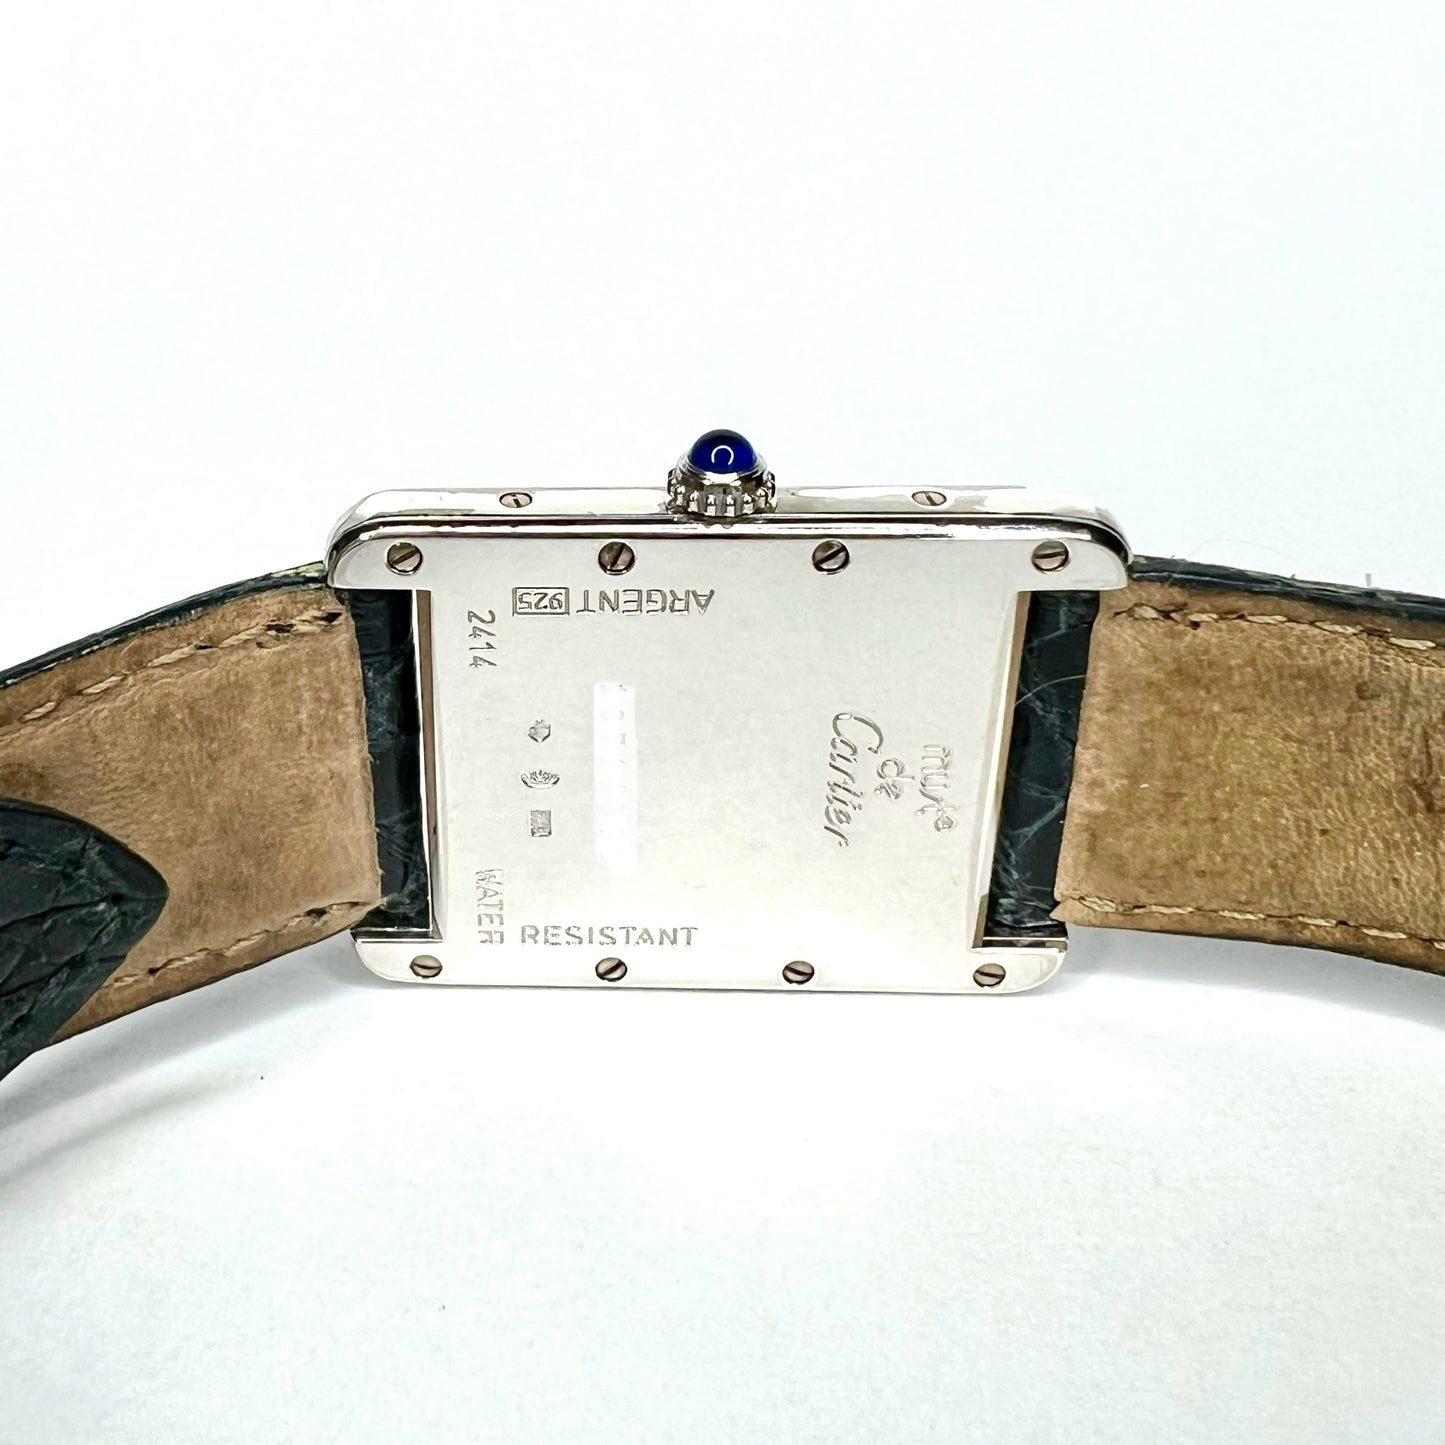 CARTIER TANK 25mm Silver 0.80TCW Diamond Watch